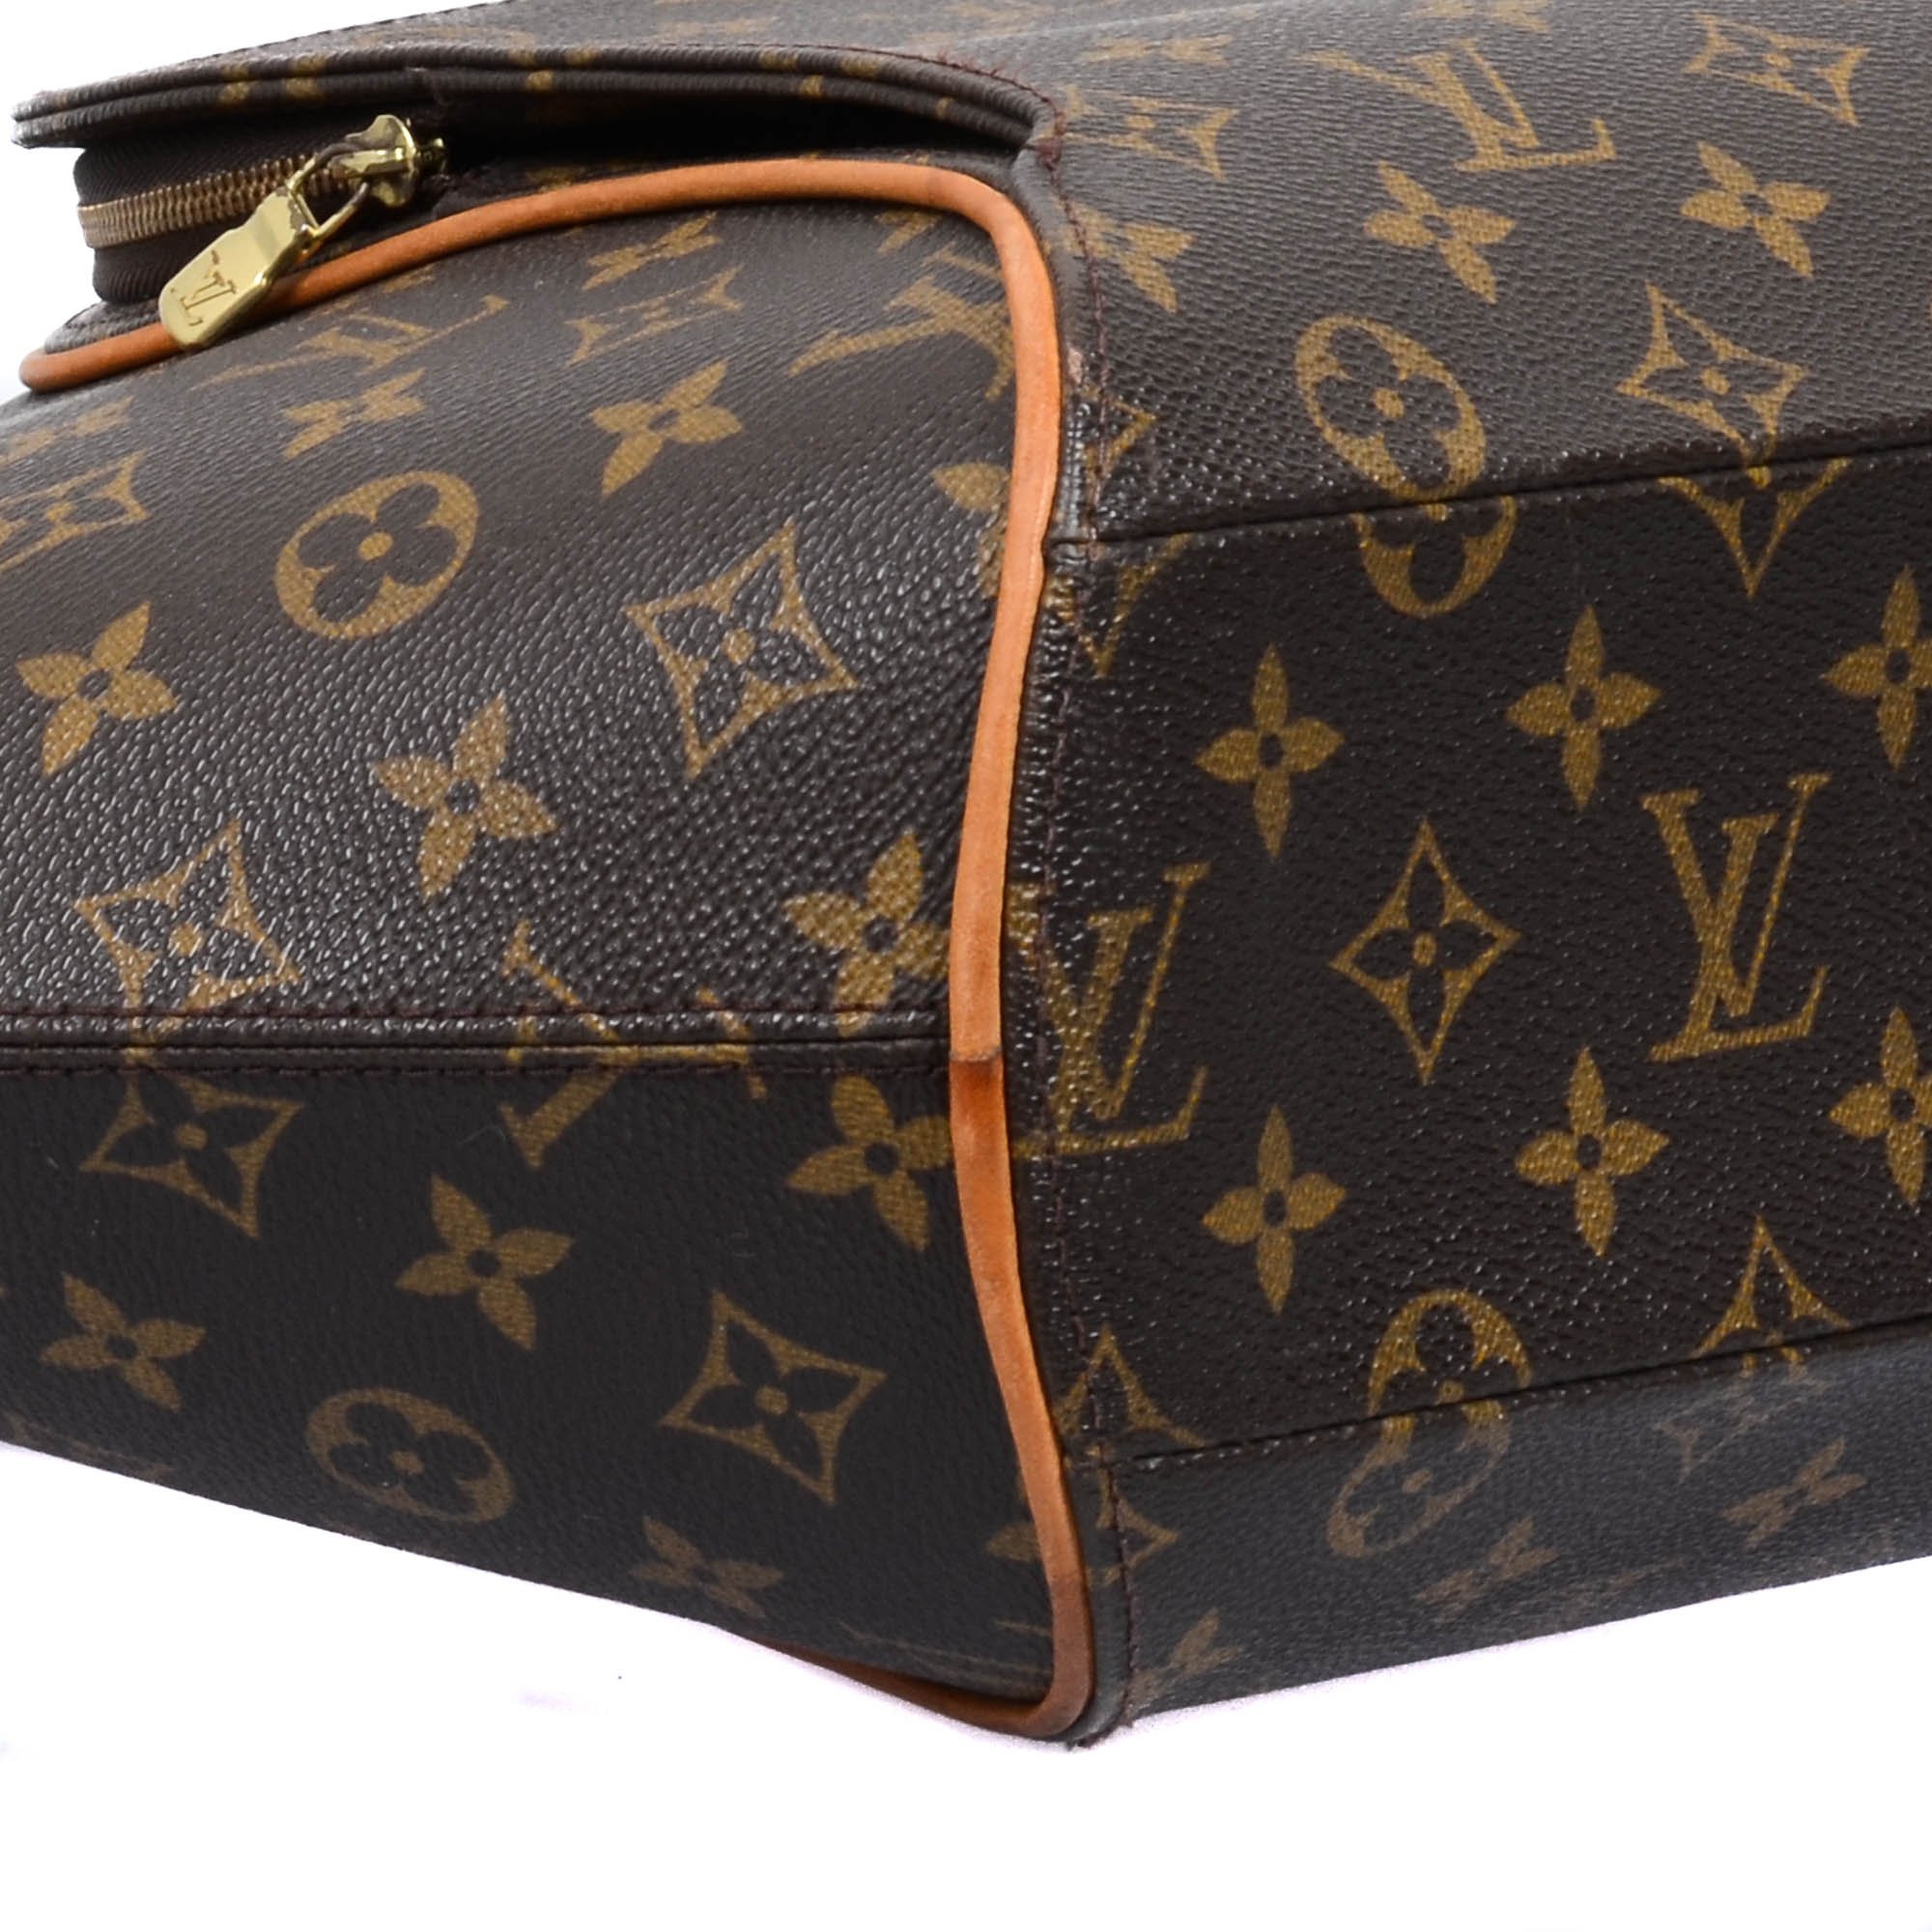 SOLD-Incredible vintage Louis Vuitton Ellipse MM handbag. 15”w 16